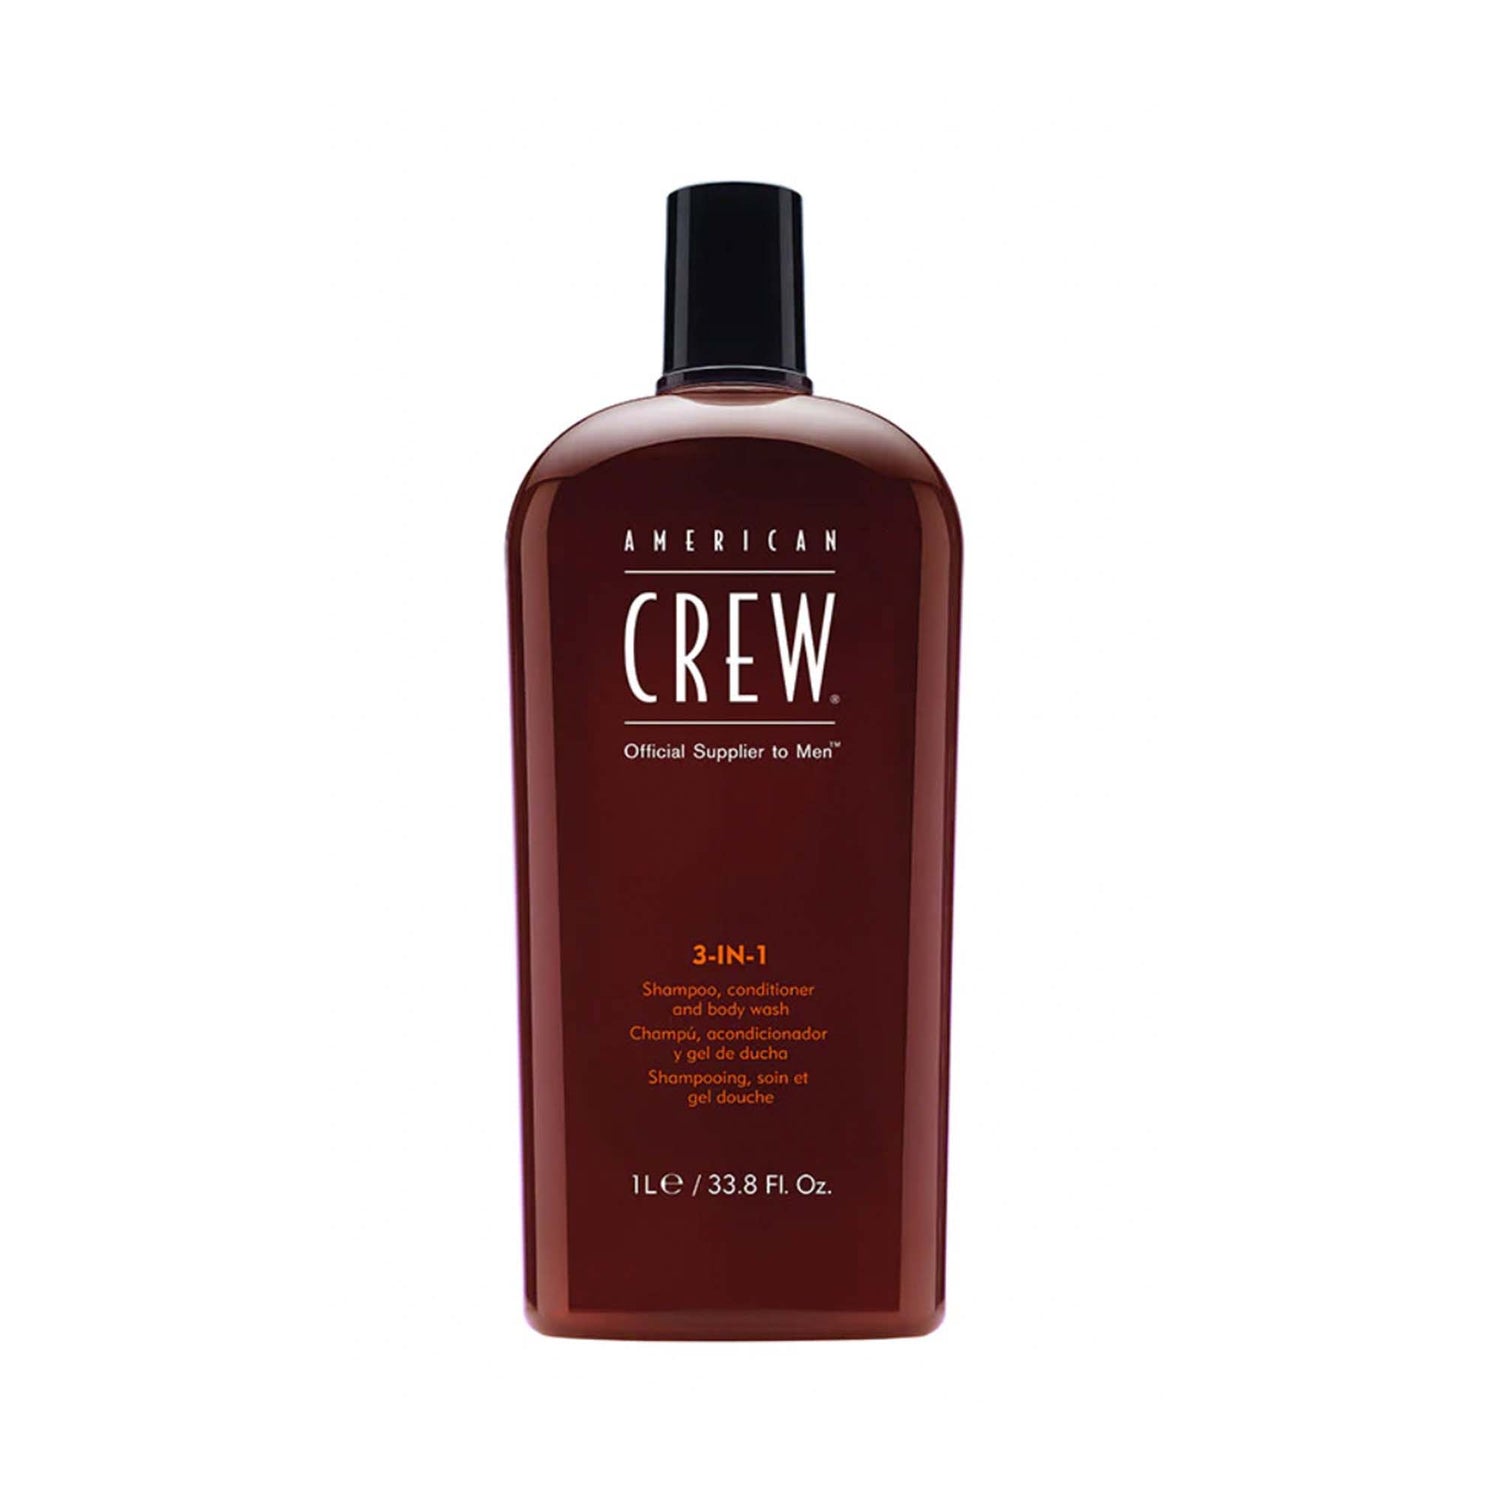 American Crew 3-IN-1 Shampoo, Conditioner and Body Wash